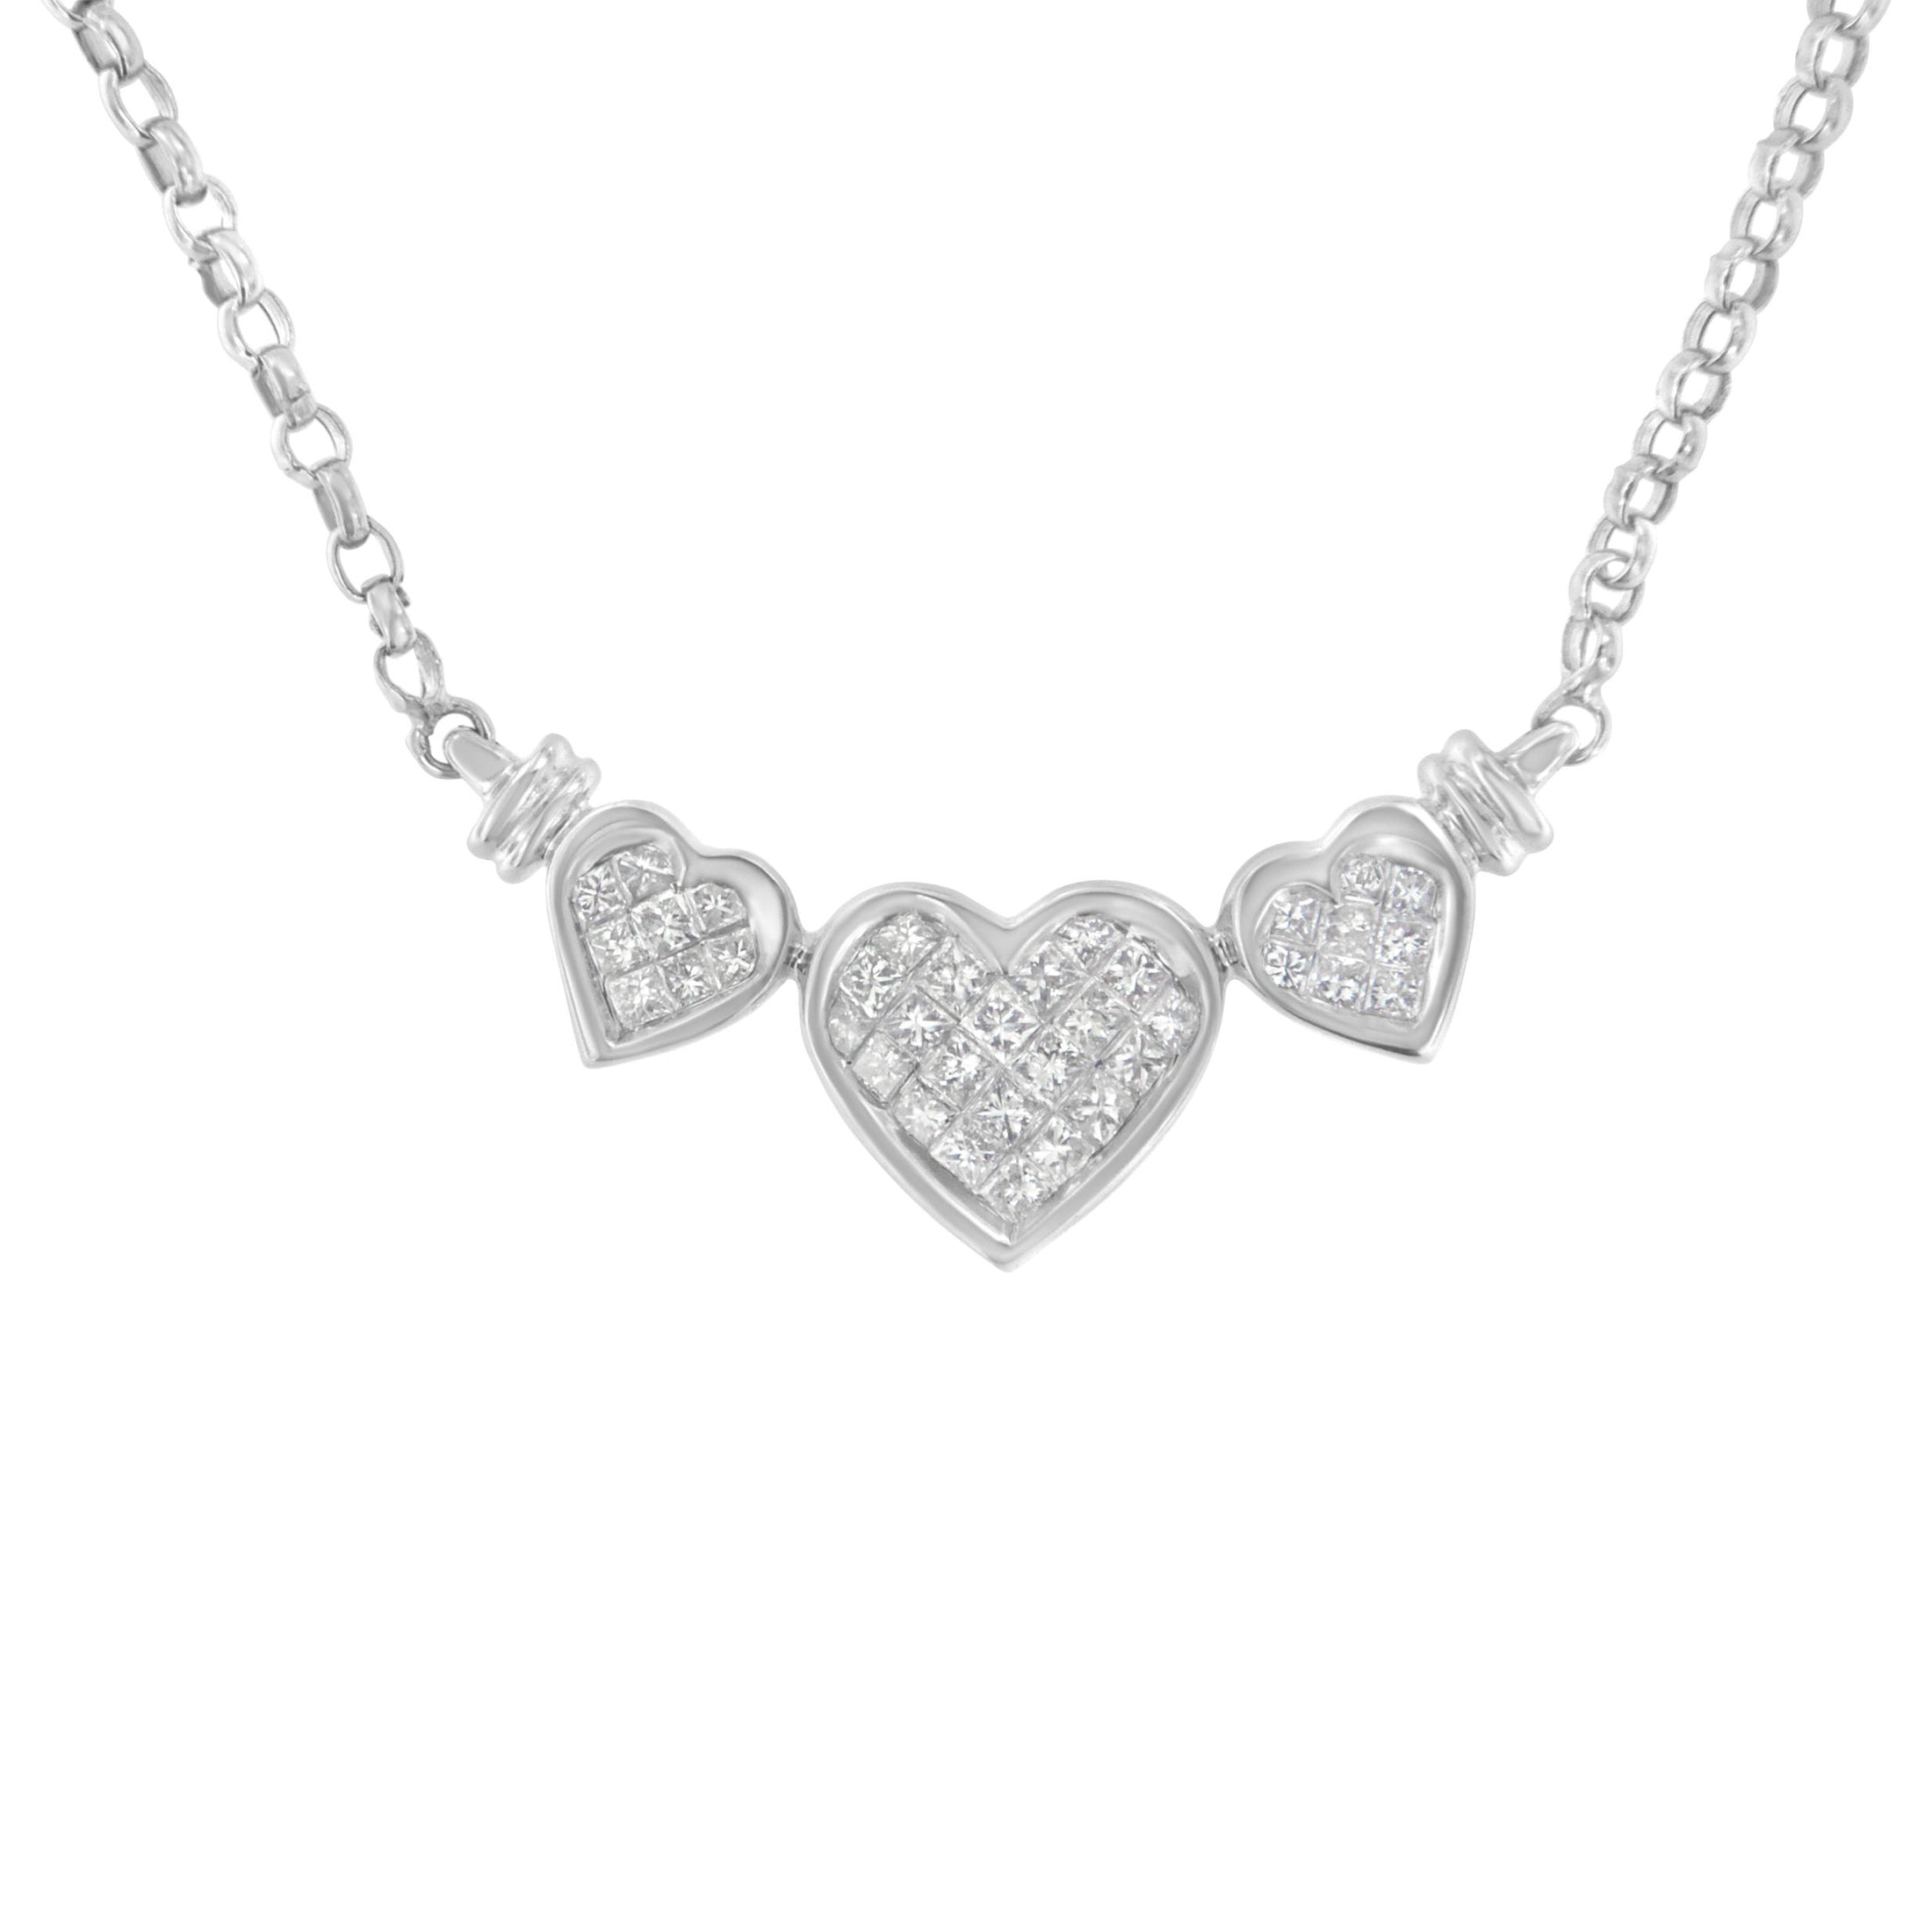 14K White Gold 1.0 Cttw Princess Cut Diamond Three Heart 18" Statement Pendant Necklace